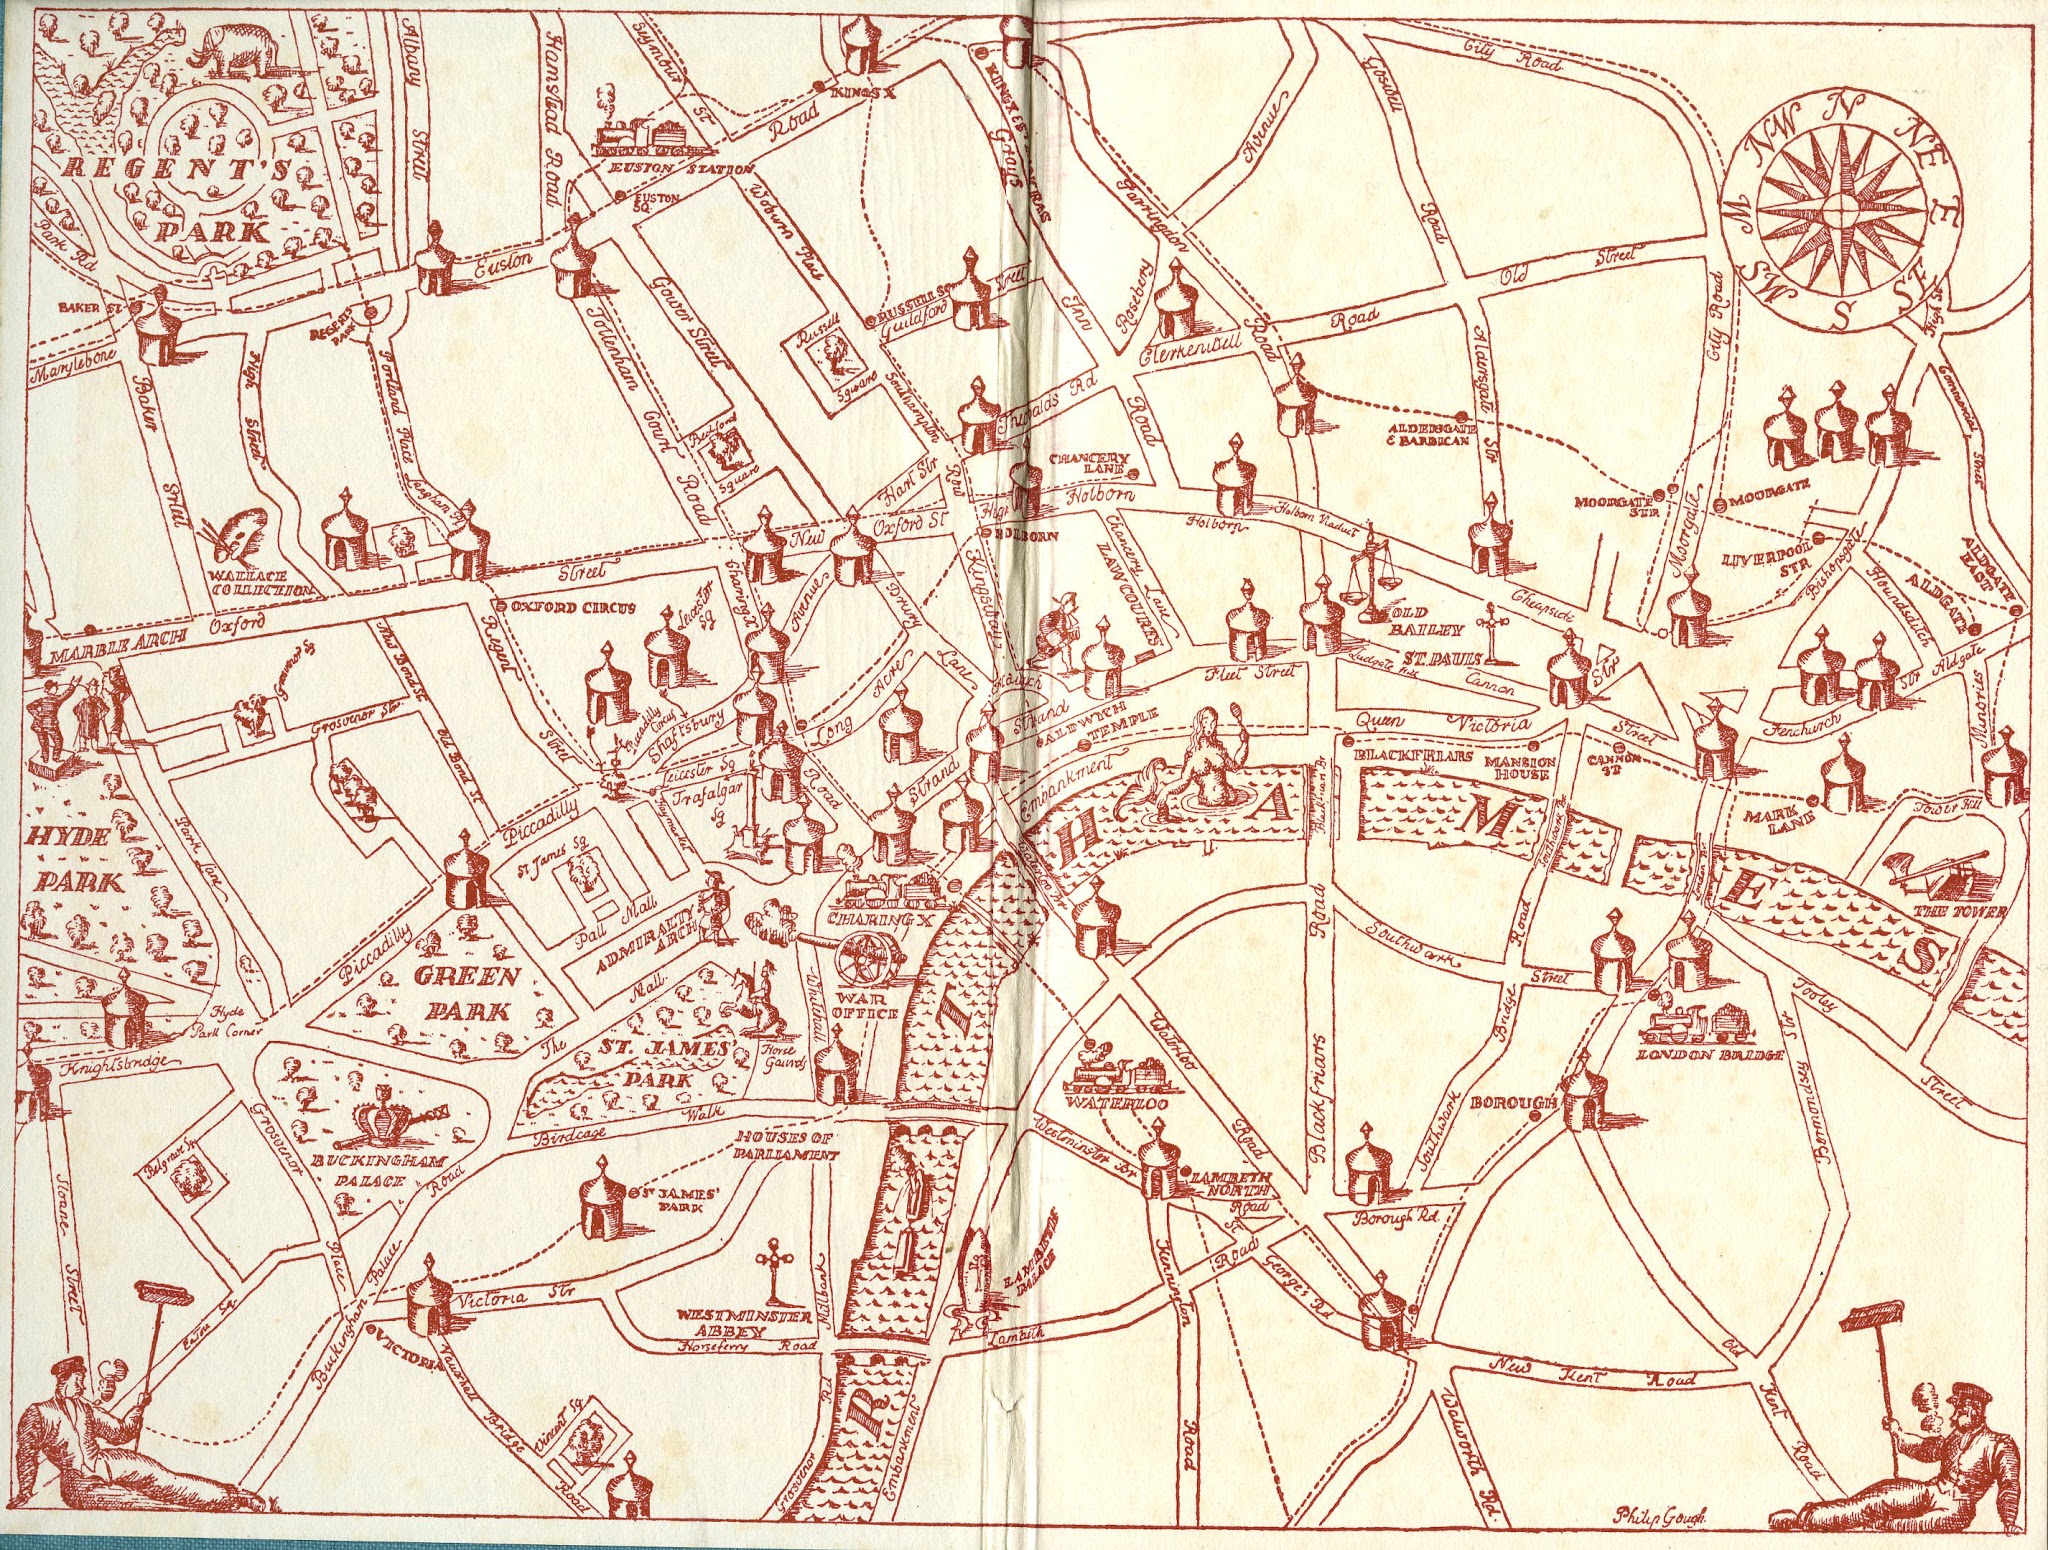 Map of public lavatories in London in 1937.